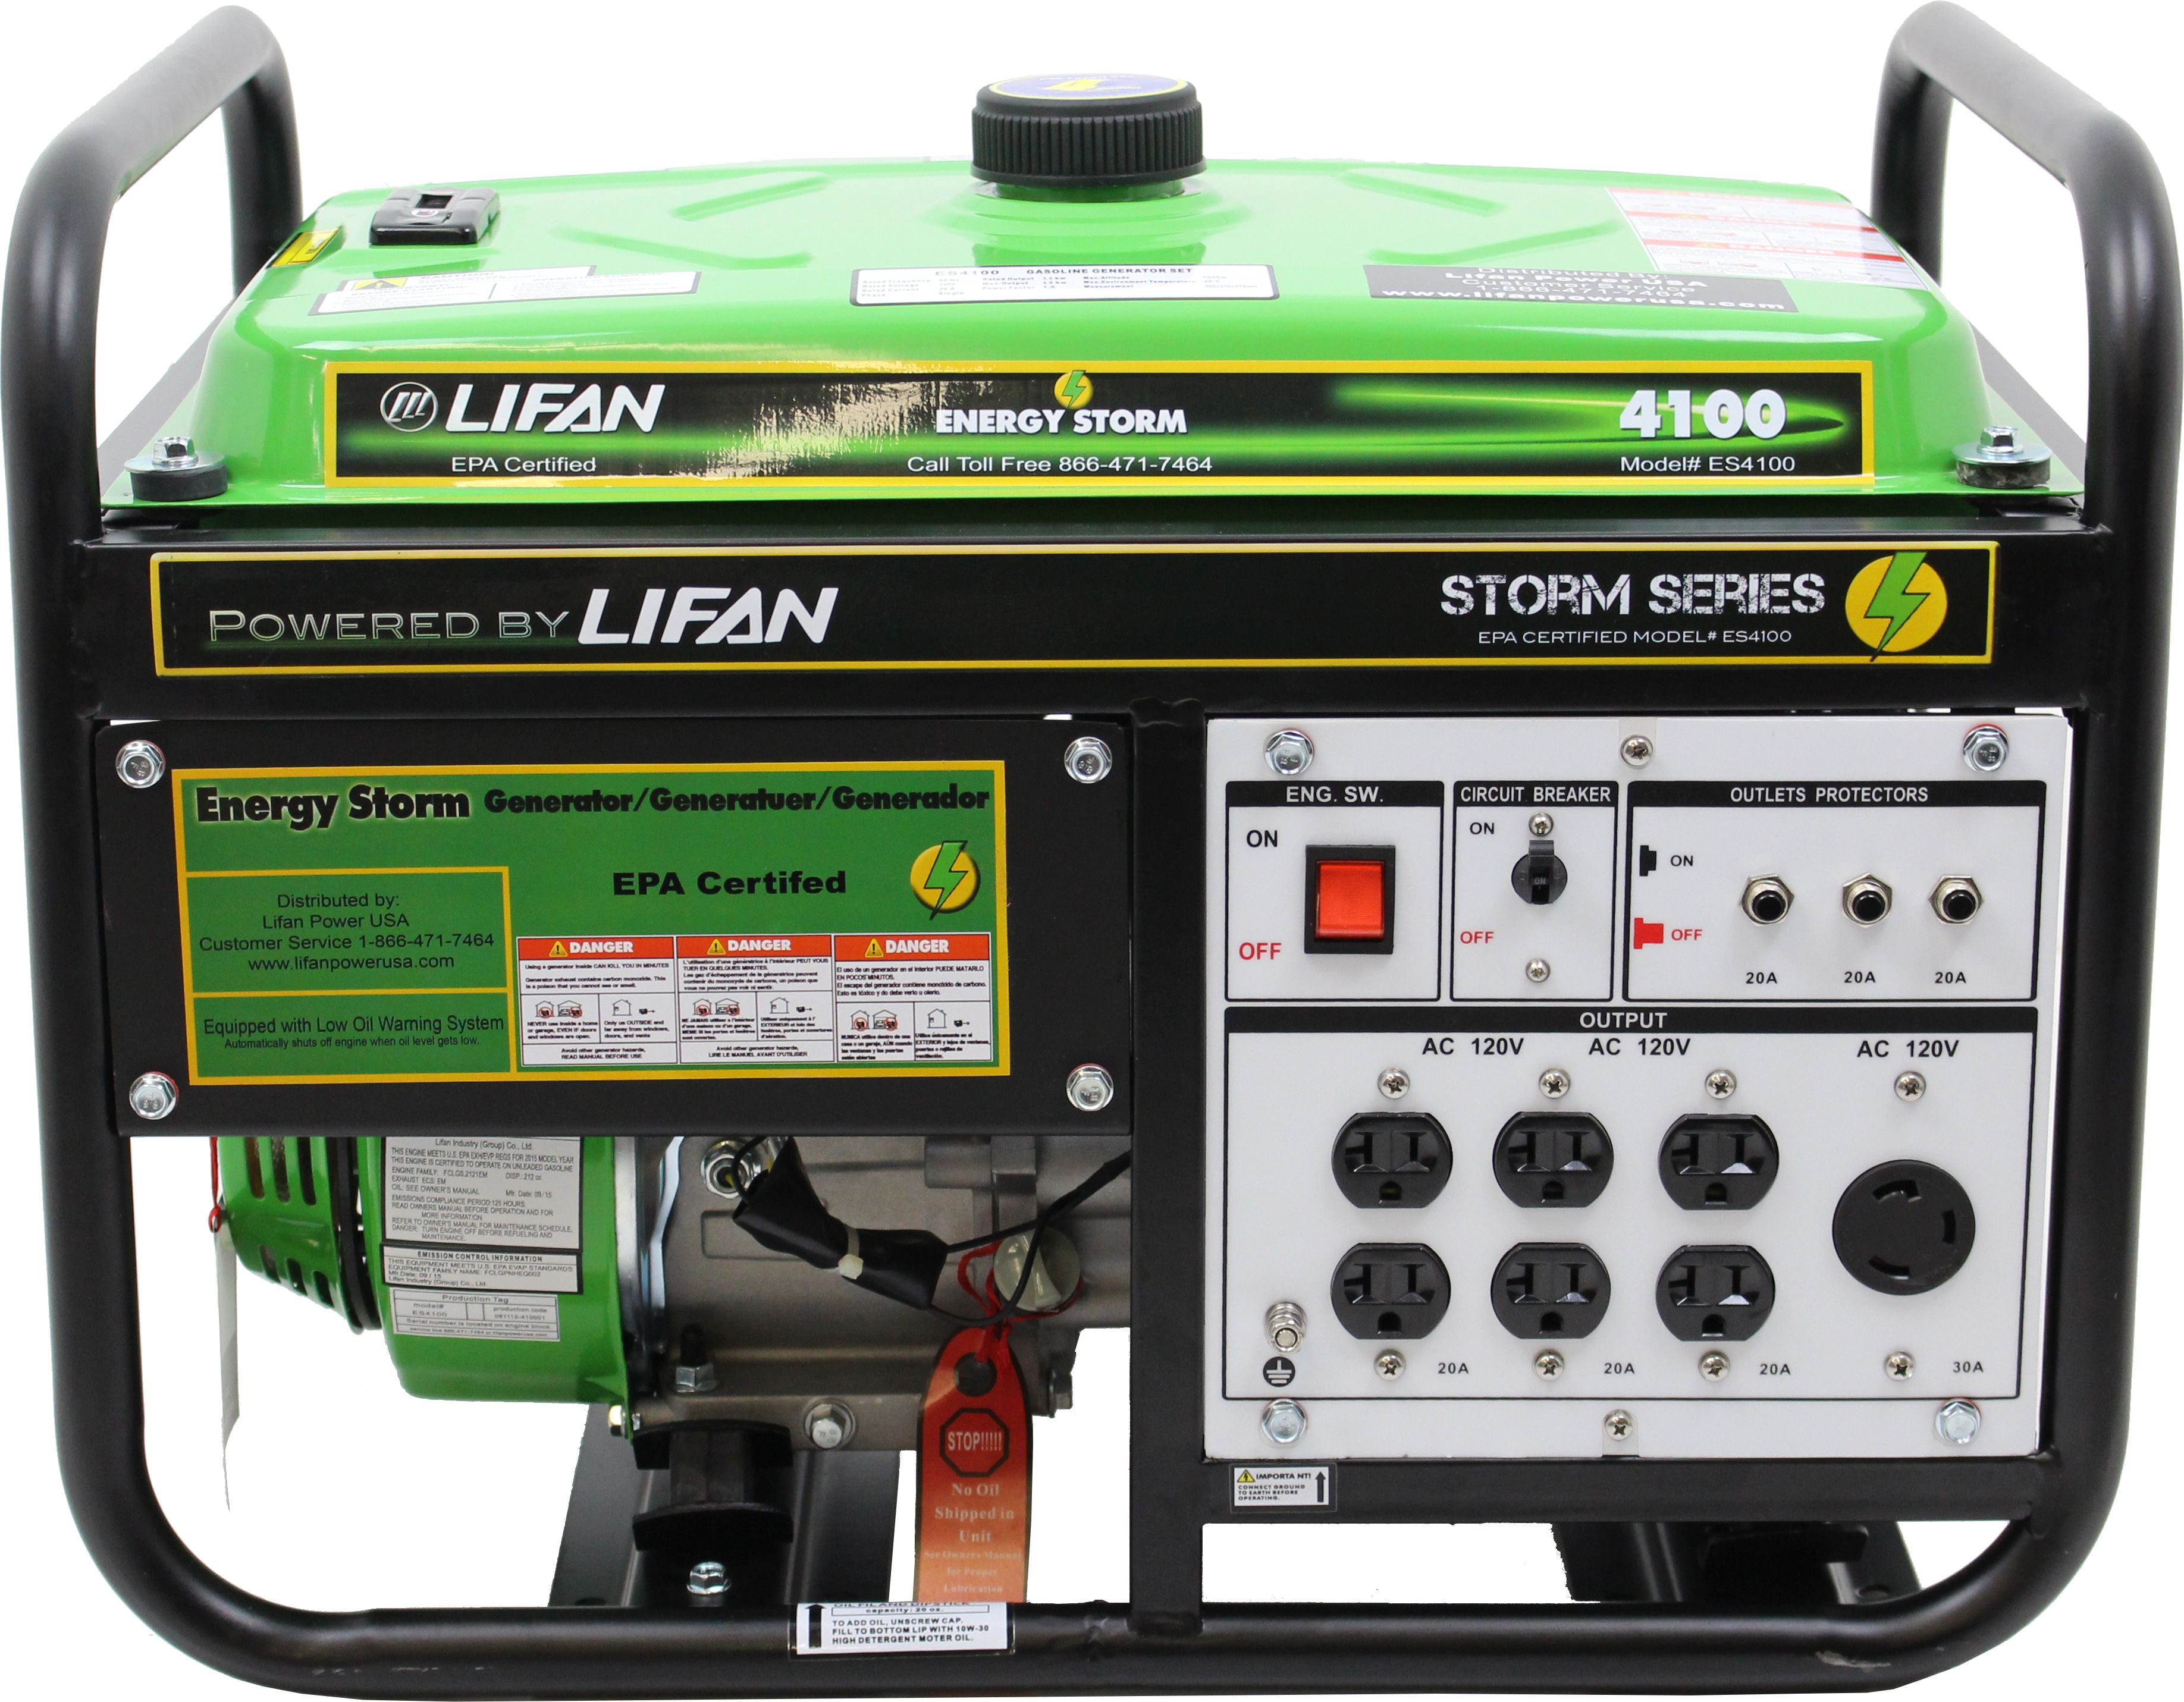 Lifan Energy Storm 4100, 211cc 7hp, 4-Stroke Industrial Grade, Recoil Start, OHV Gasoline Powered Generator - Walmart.com